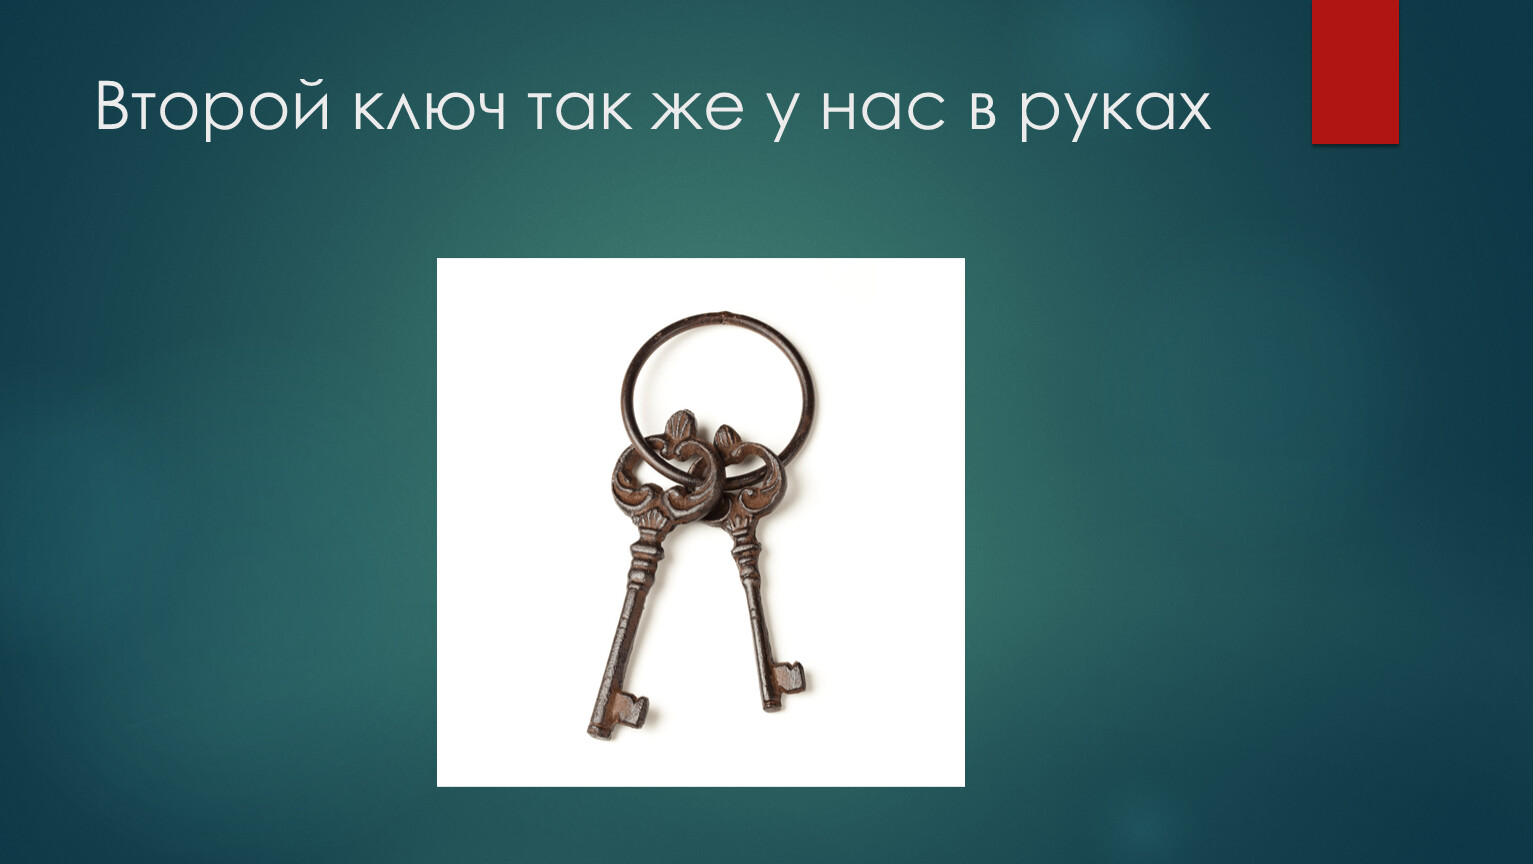 Первый ключ 2. Ключ 1/2. Три ключа презентация. Два ключика. Же ключ 2.